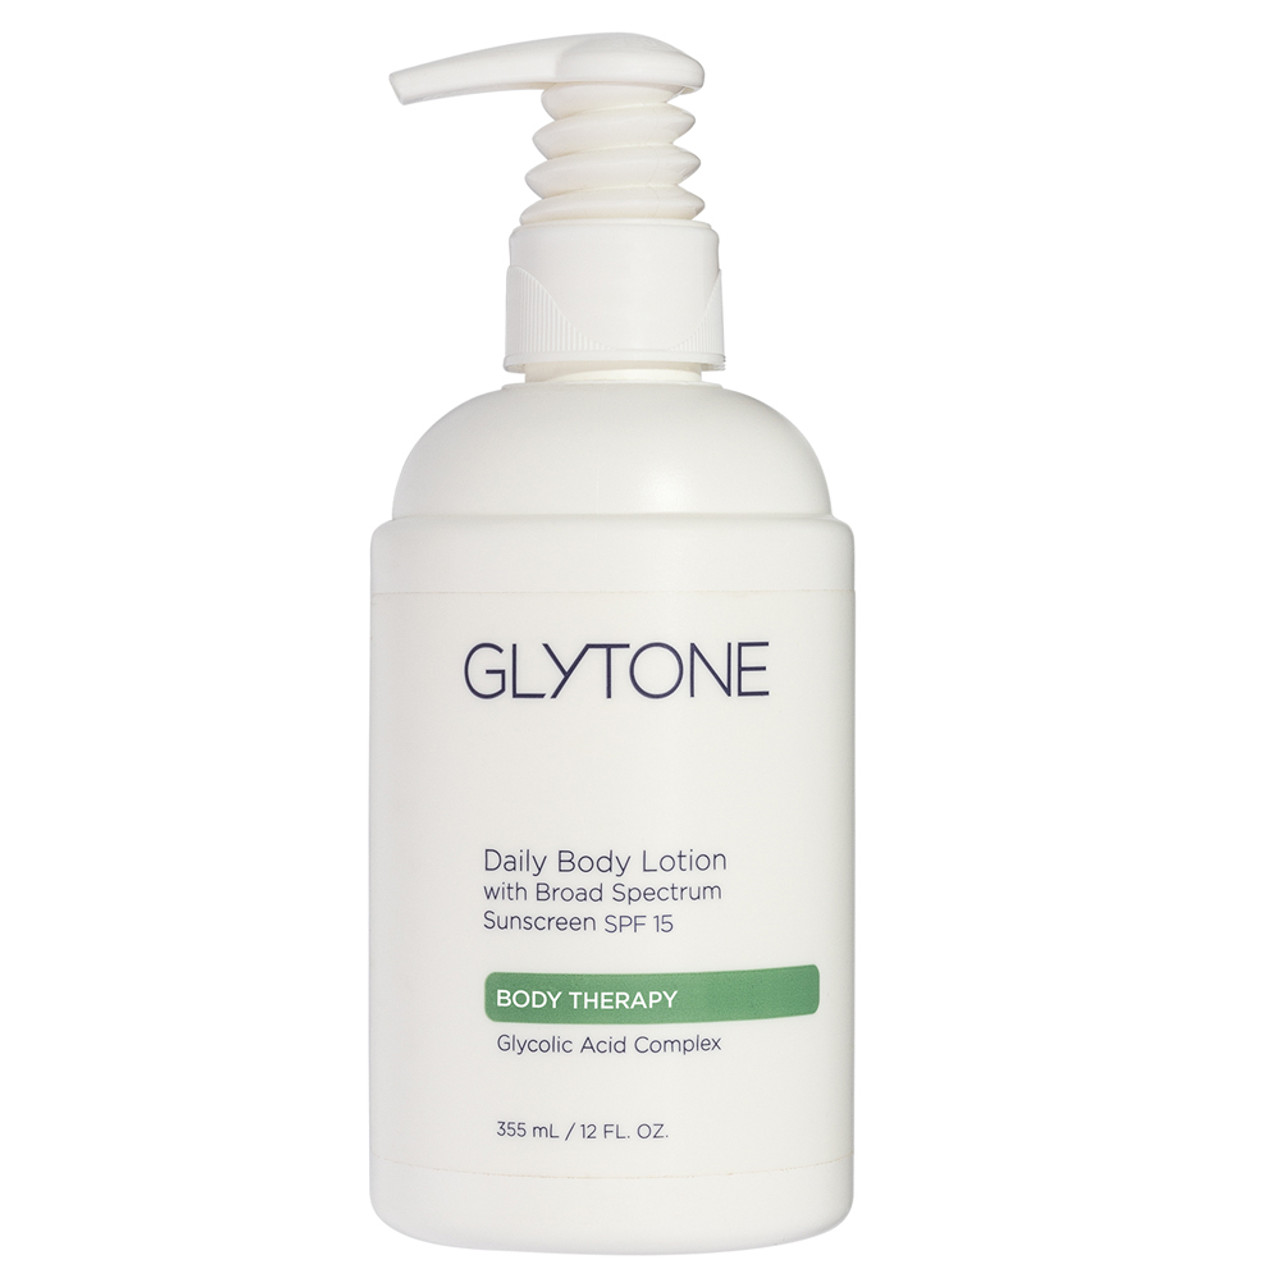 Glytone Daily Body Lotion Broad Spectrum Sunscreen SPF 15 BeautifiedYou.com